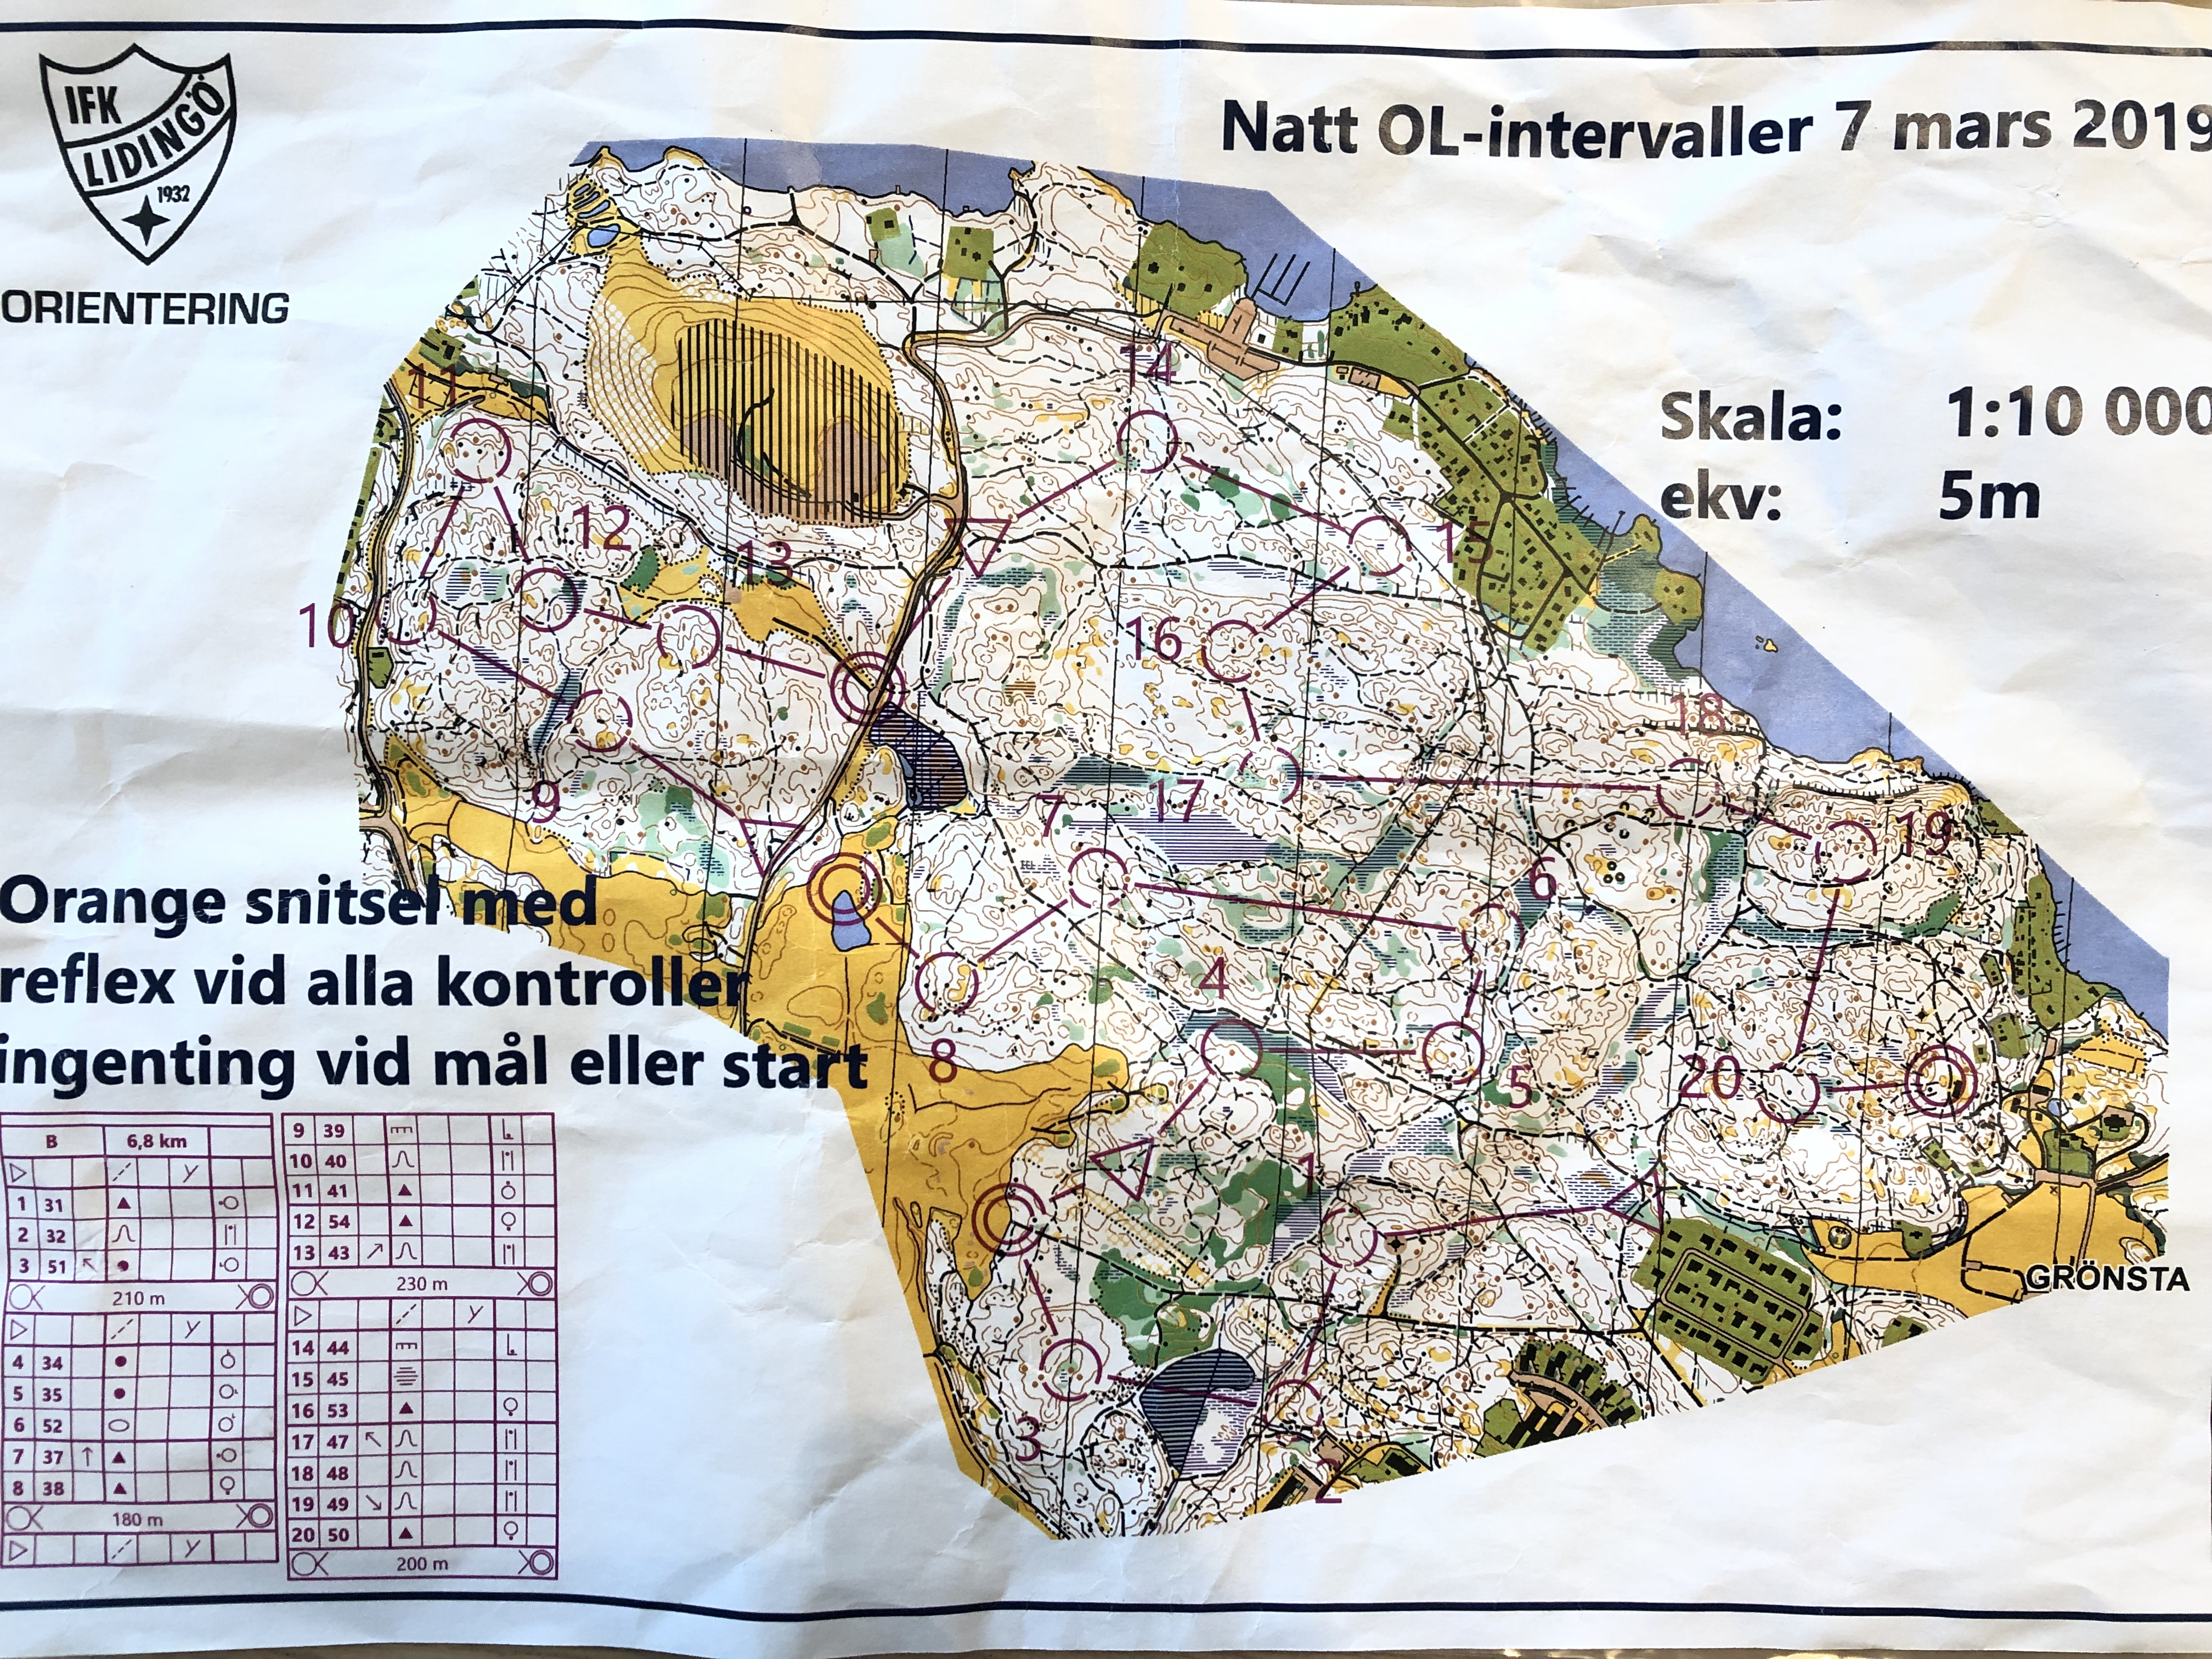 NattOL-intervaller (2019-03-07)